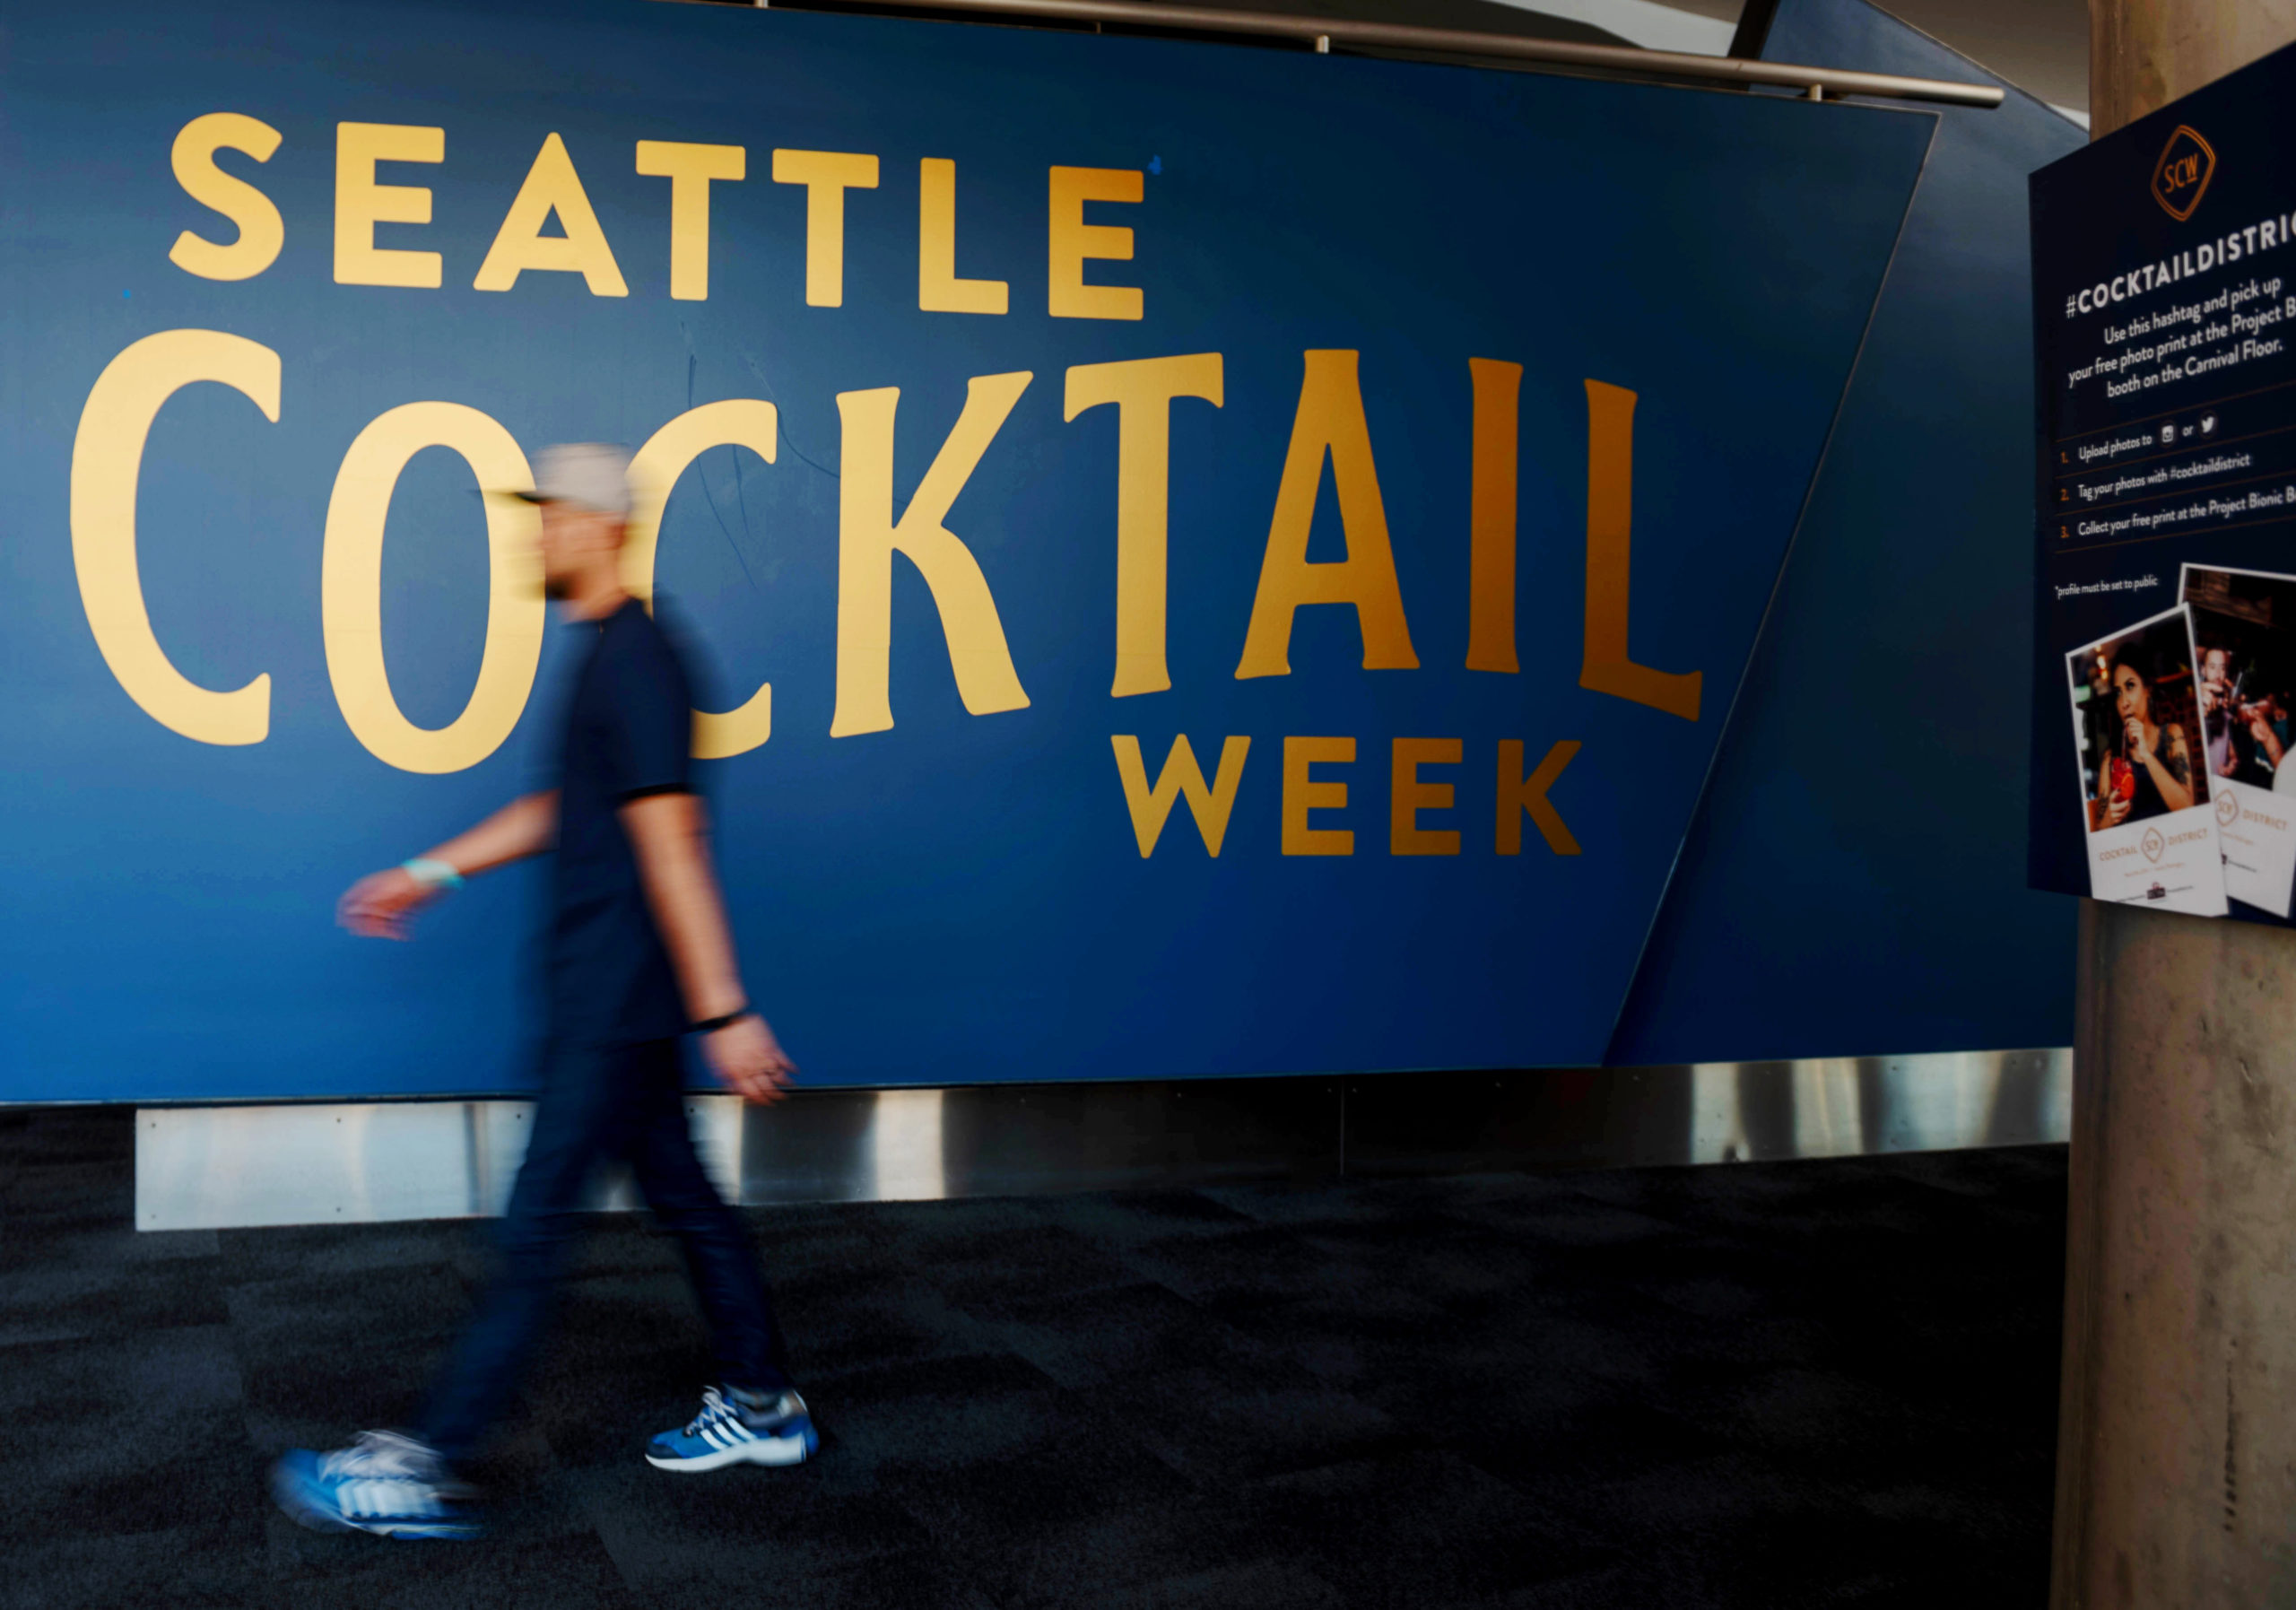 Seattle Cocktail Week Gruman Public Relations